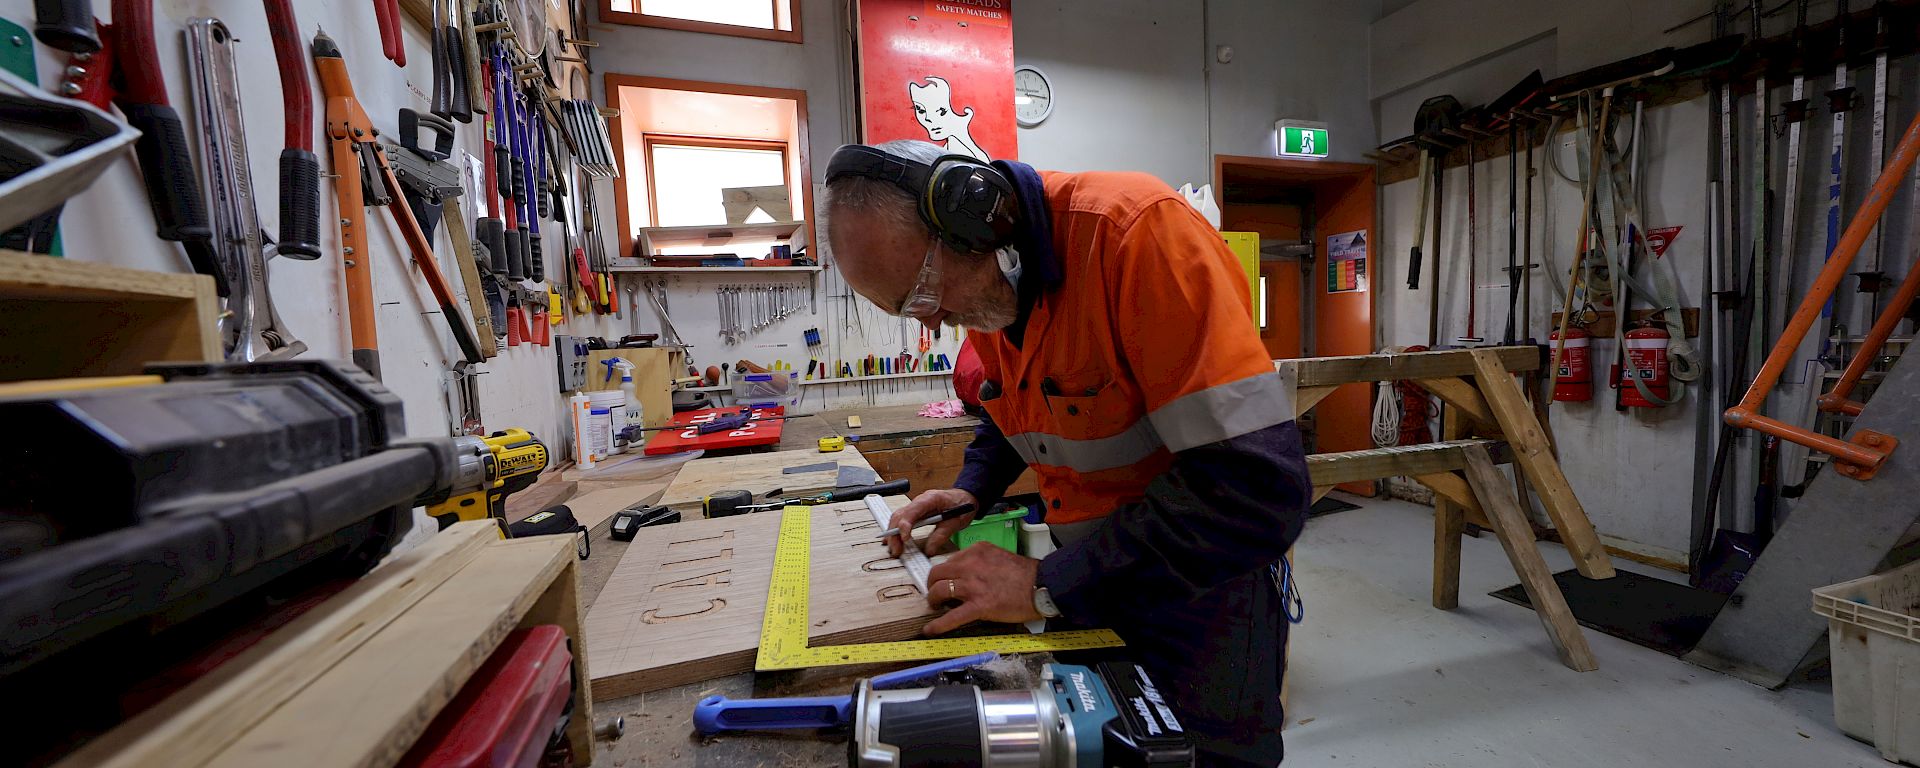 An expeditioner in hi-vis works on a wooden sign in a workshop.